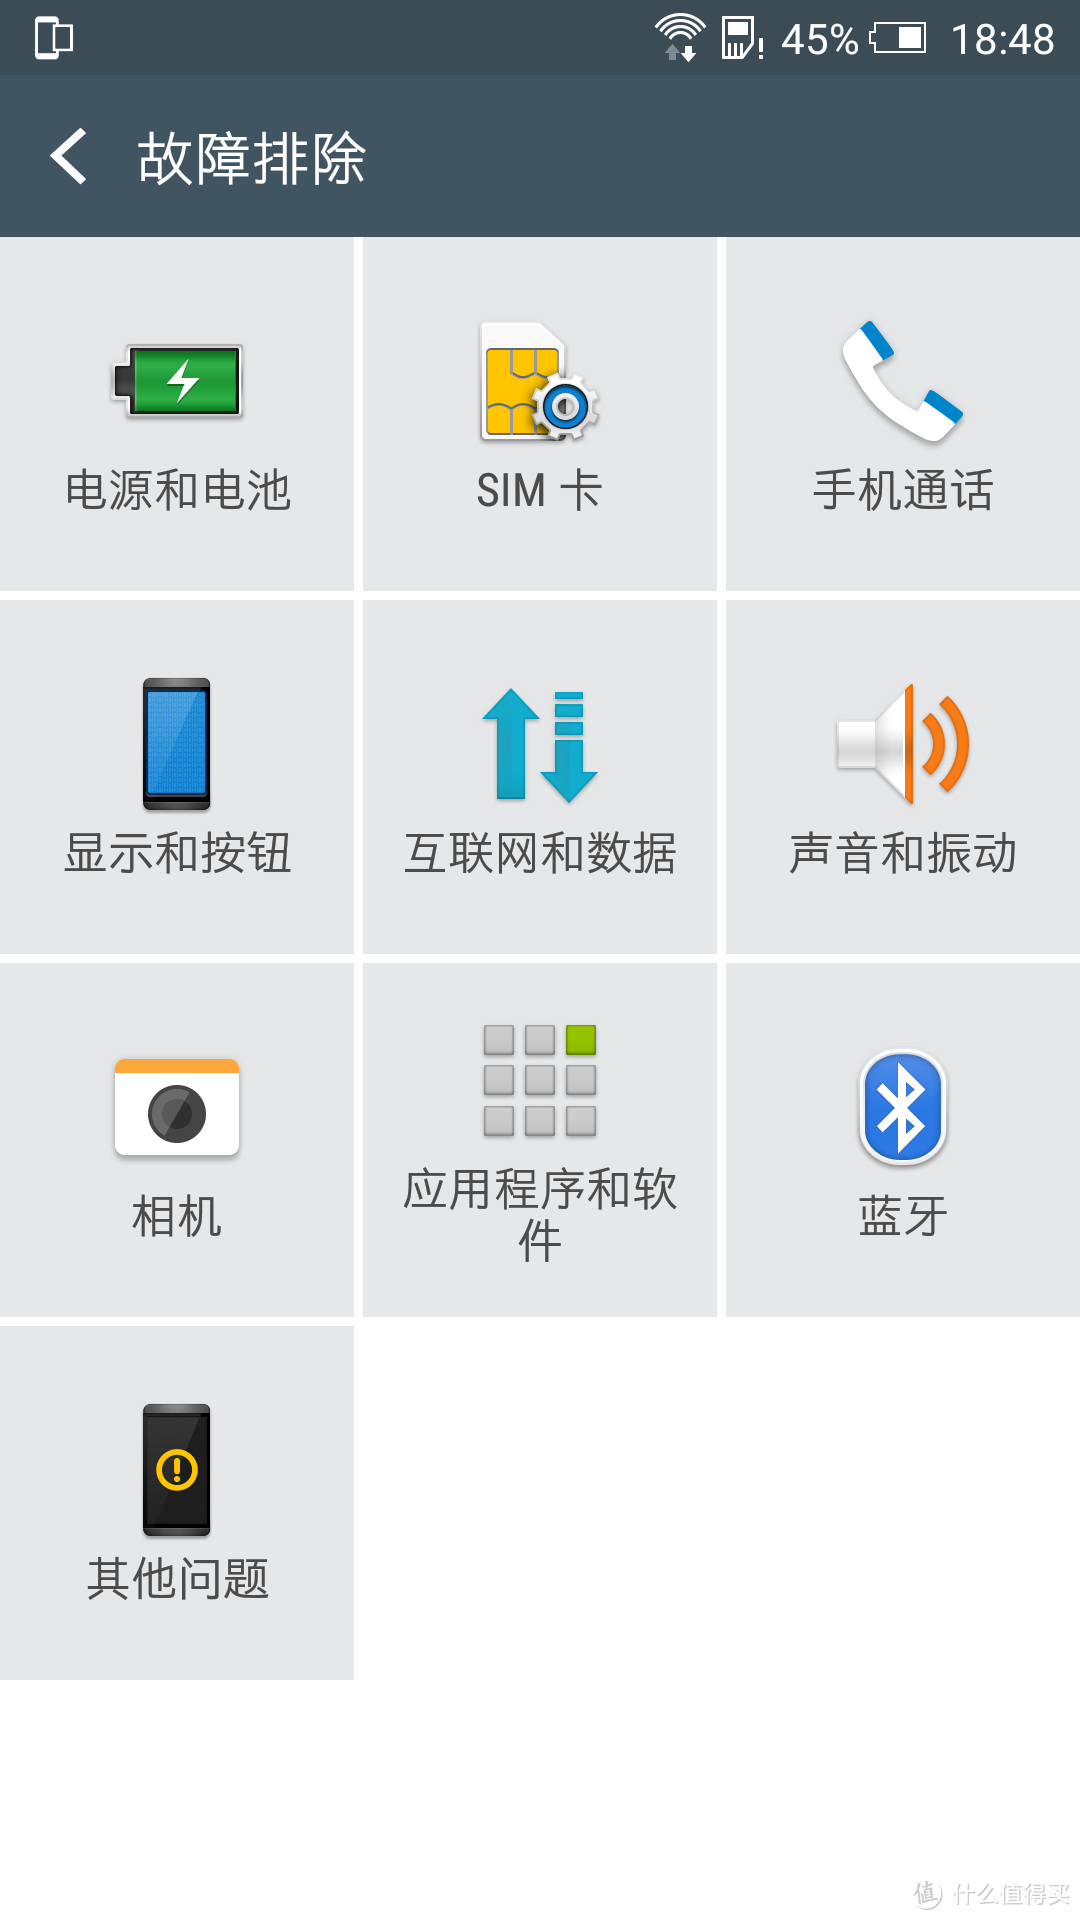 All in One, 一部靠谱的手机---HTC ONE X9智能手机众测报告